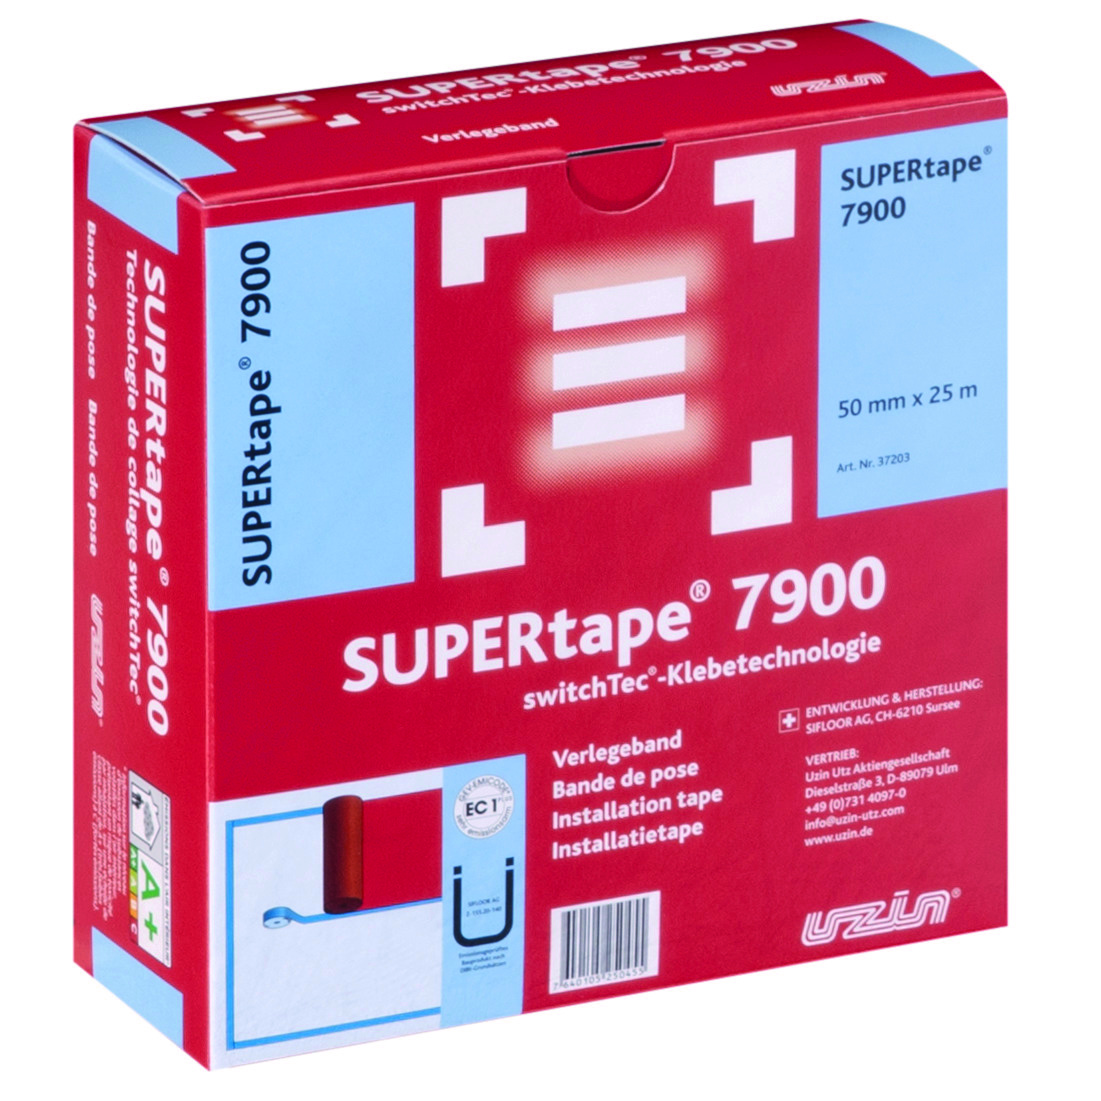 Supertape 7900-carton